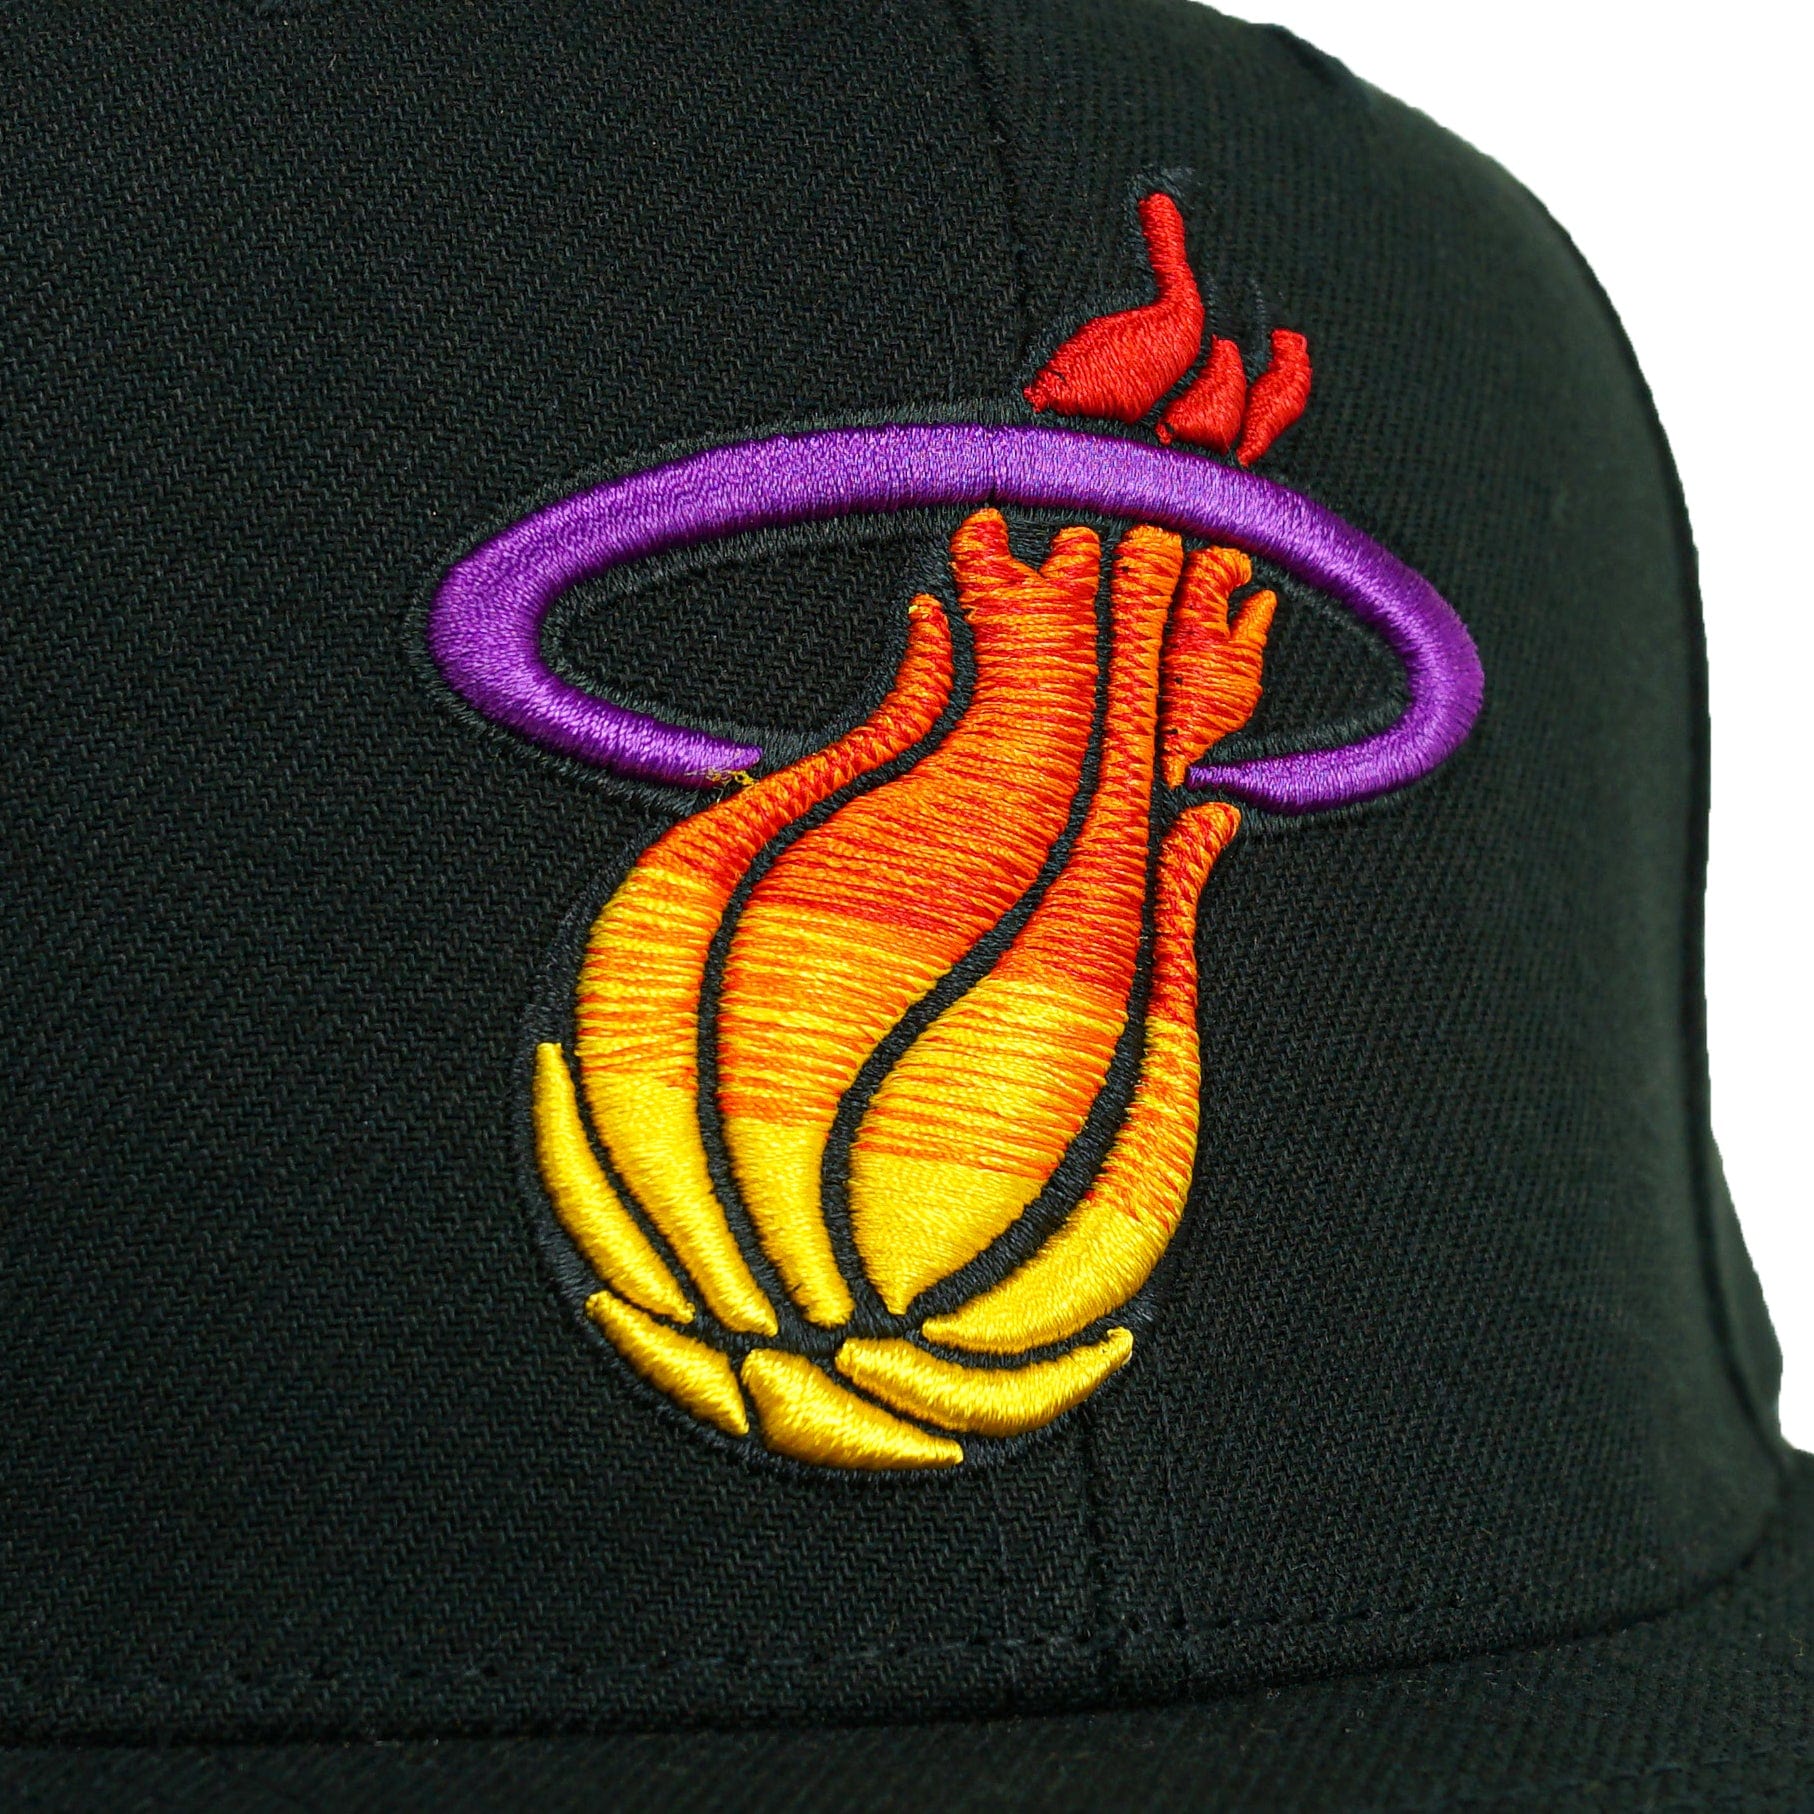 Miami Heat High Grade Snapback Hat in black